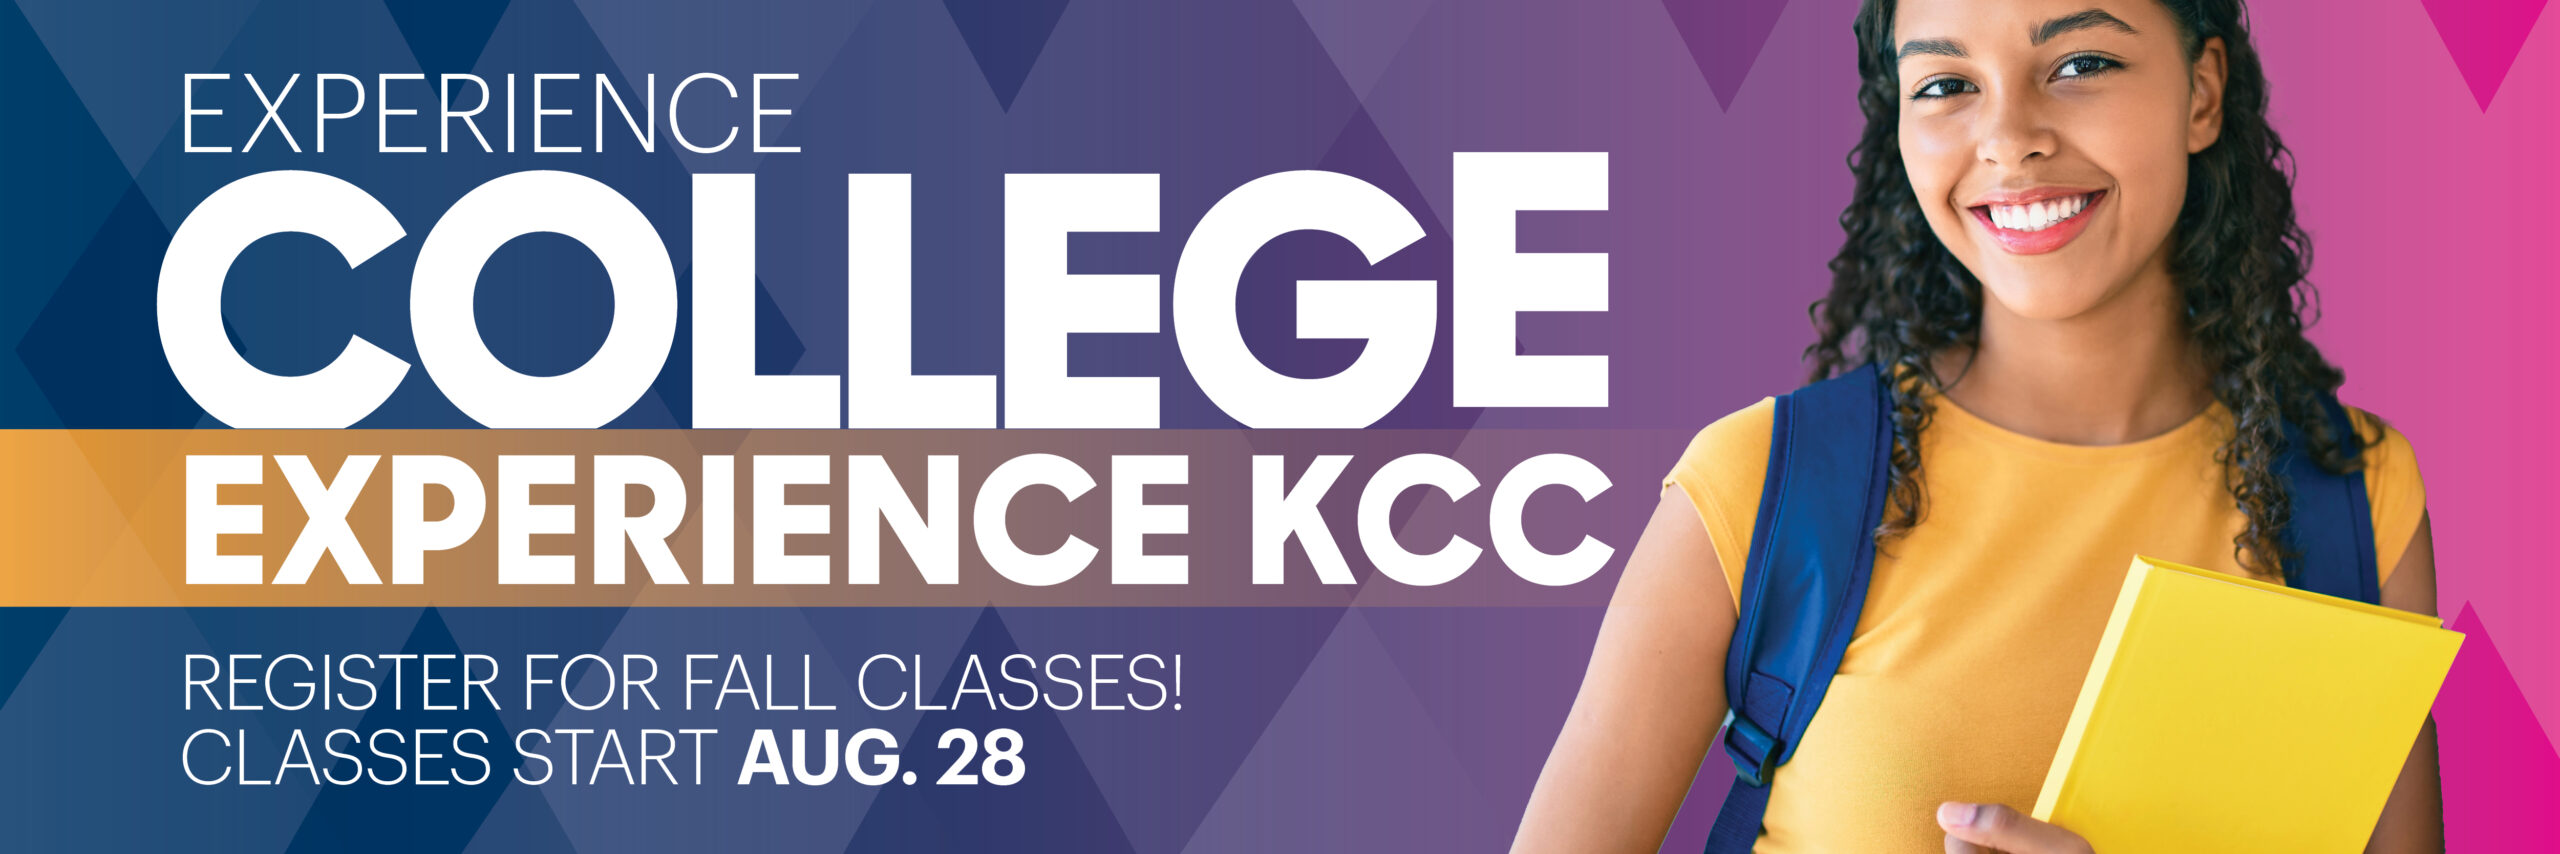 Experience KCC Kellogg Community College